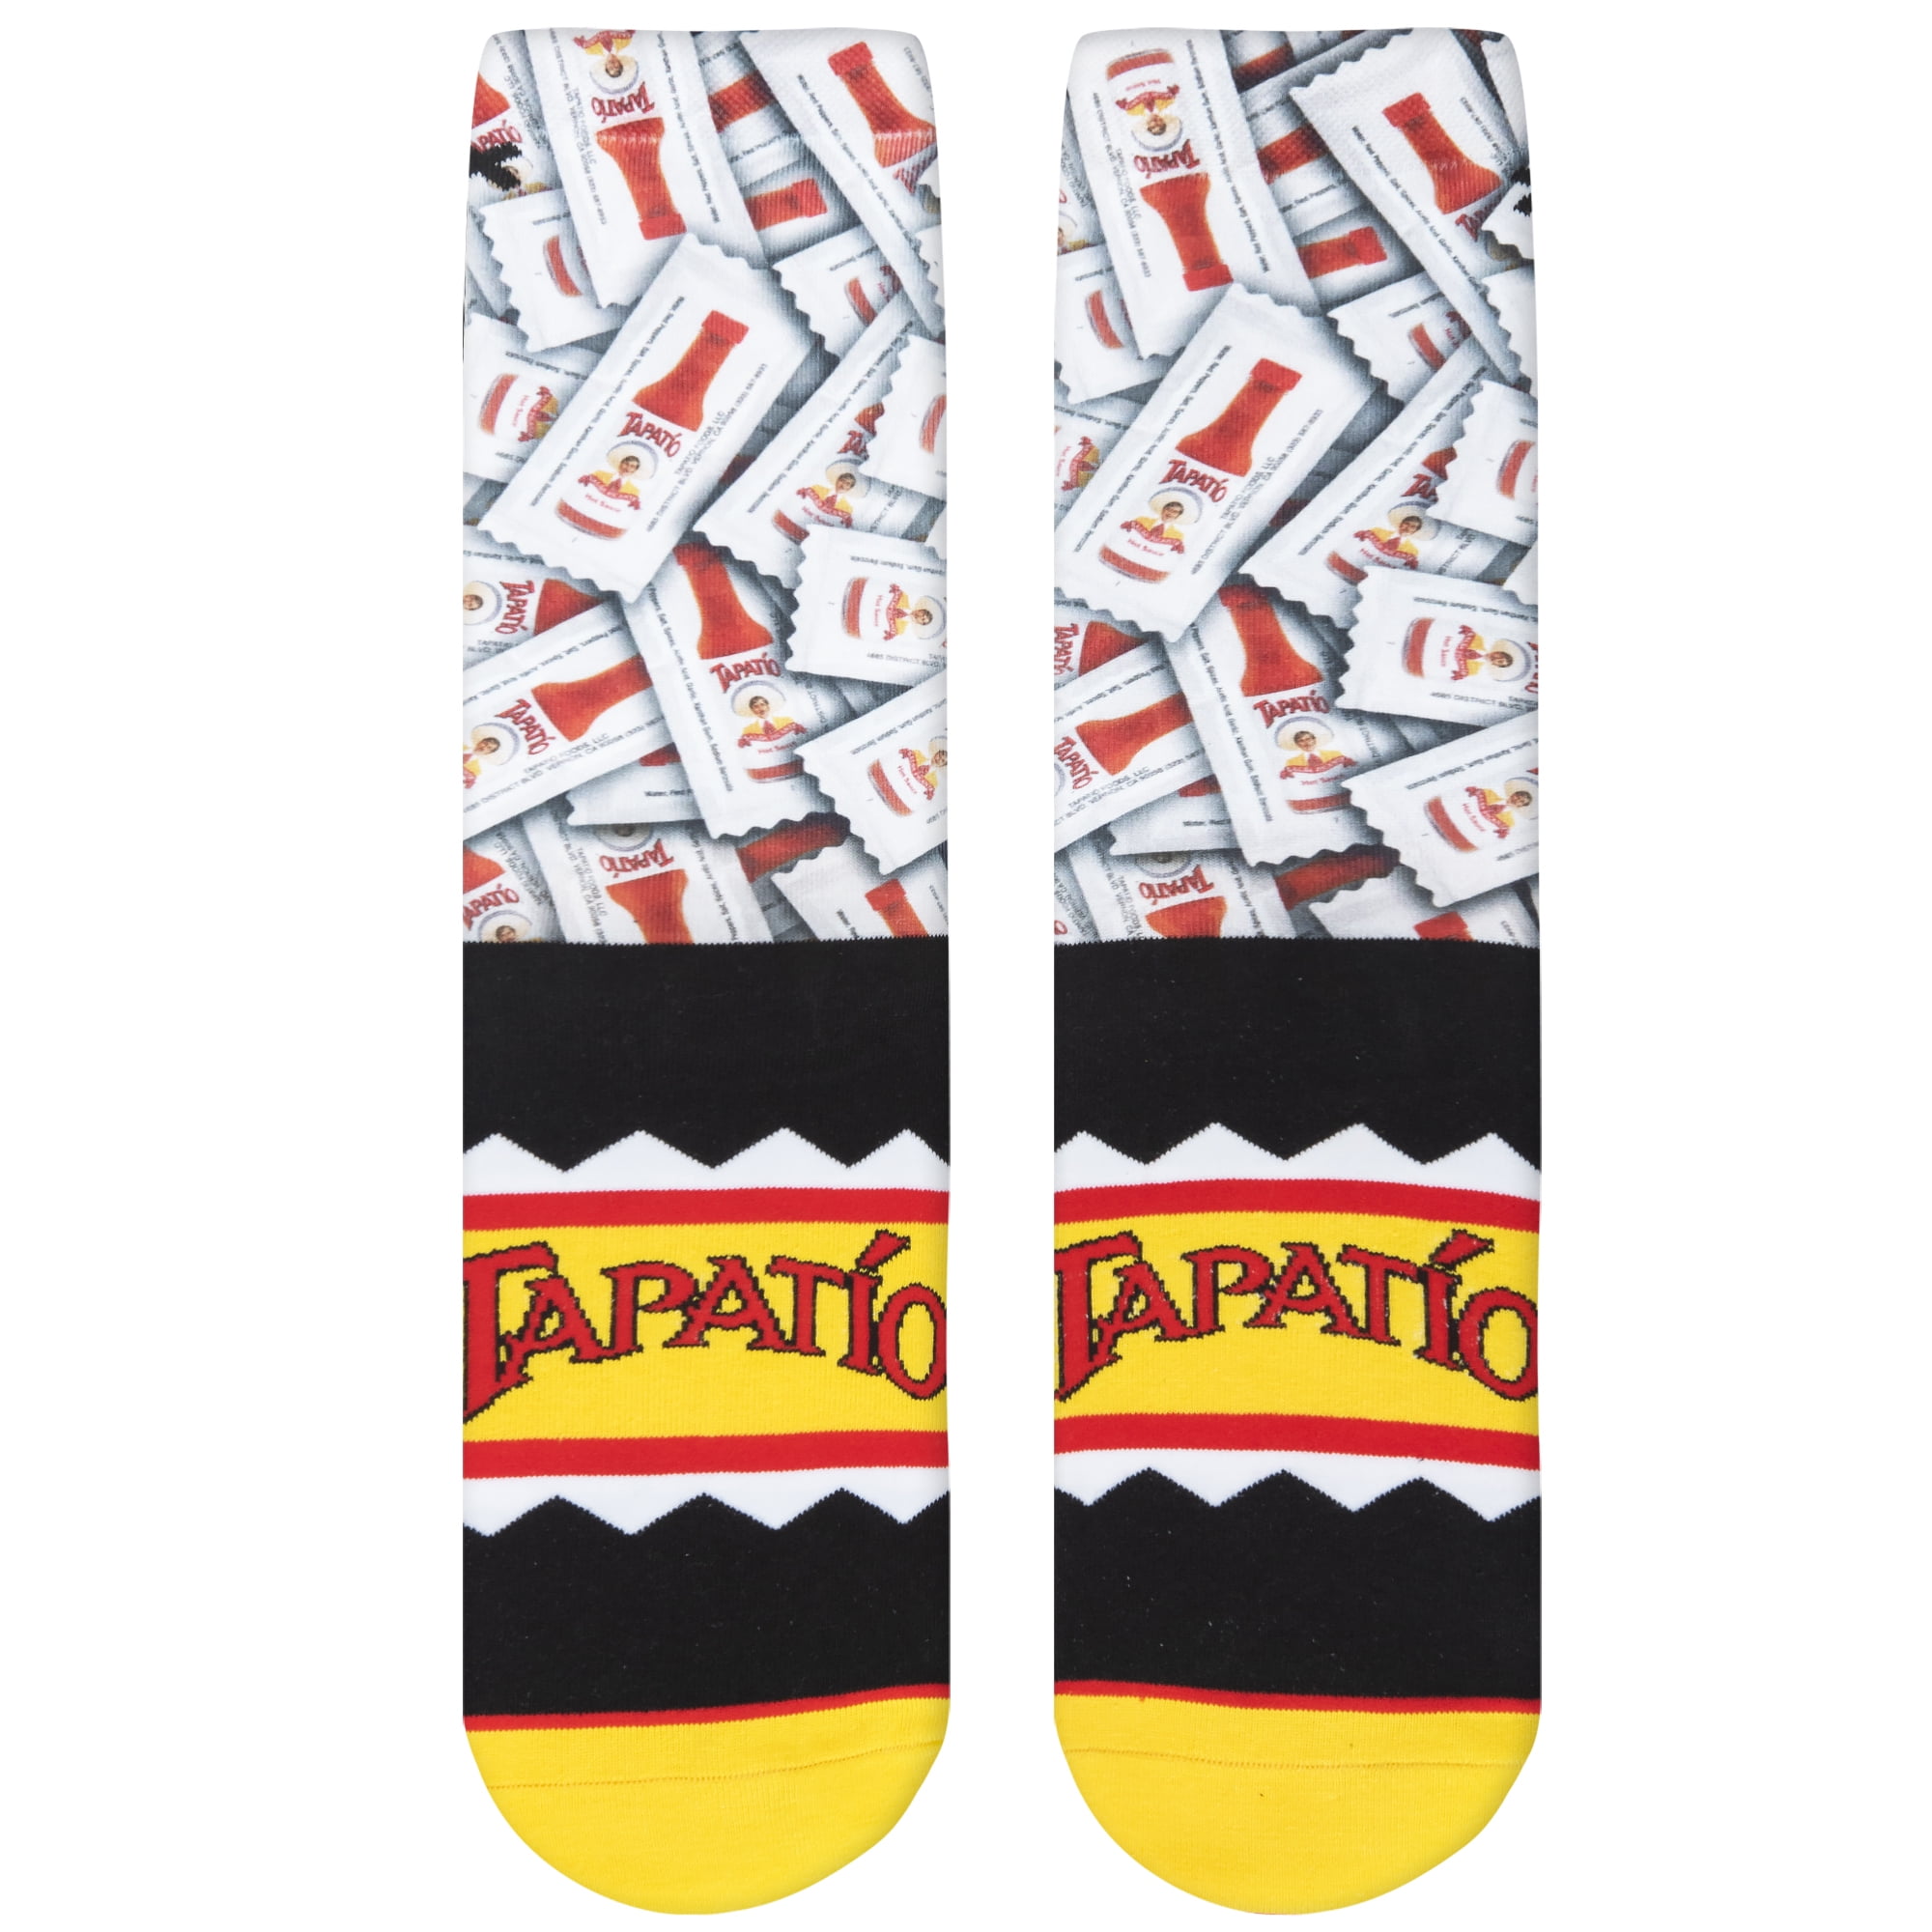 Socktopia Rage Quitter Novelty Socks Size 6-12 Men's Crew New Tags